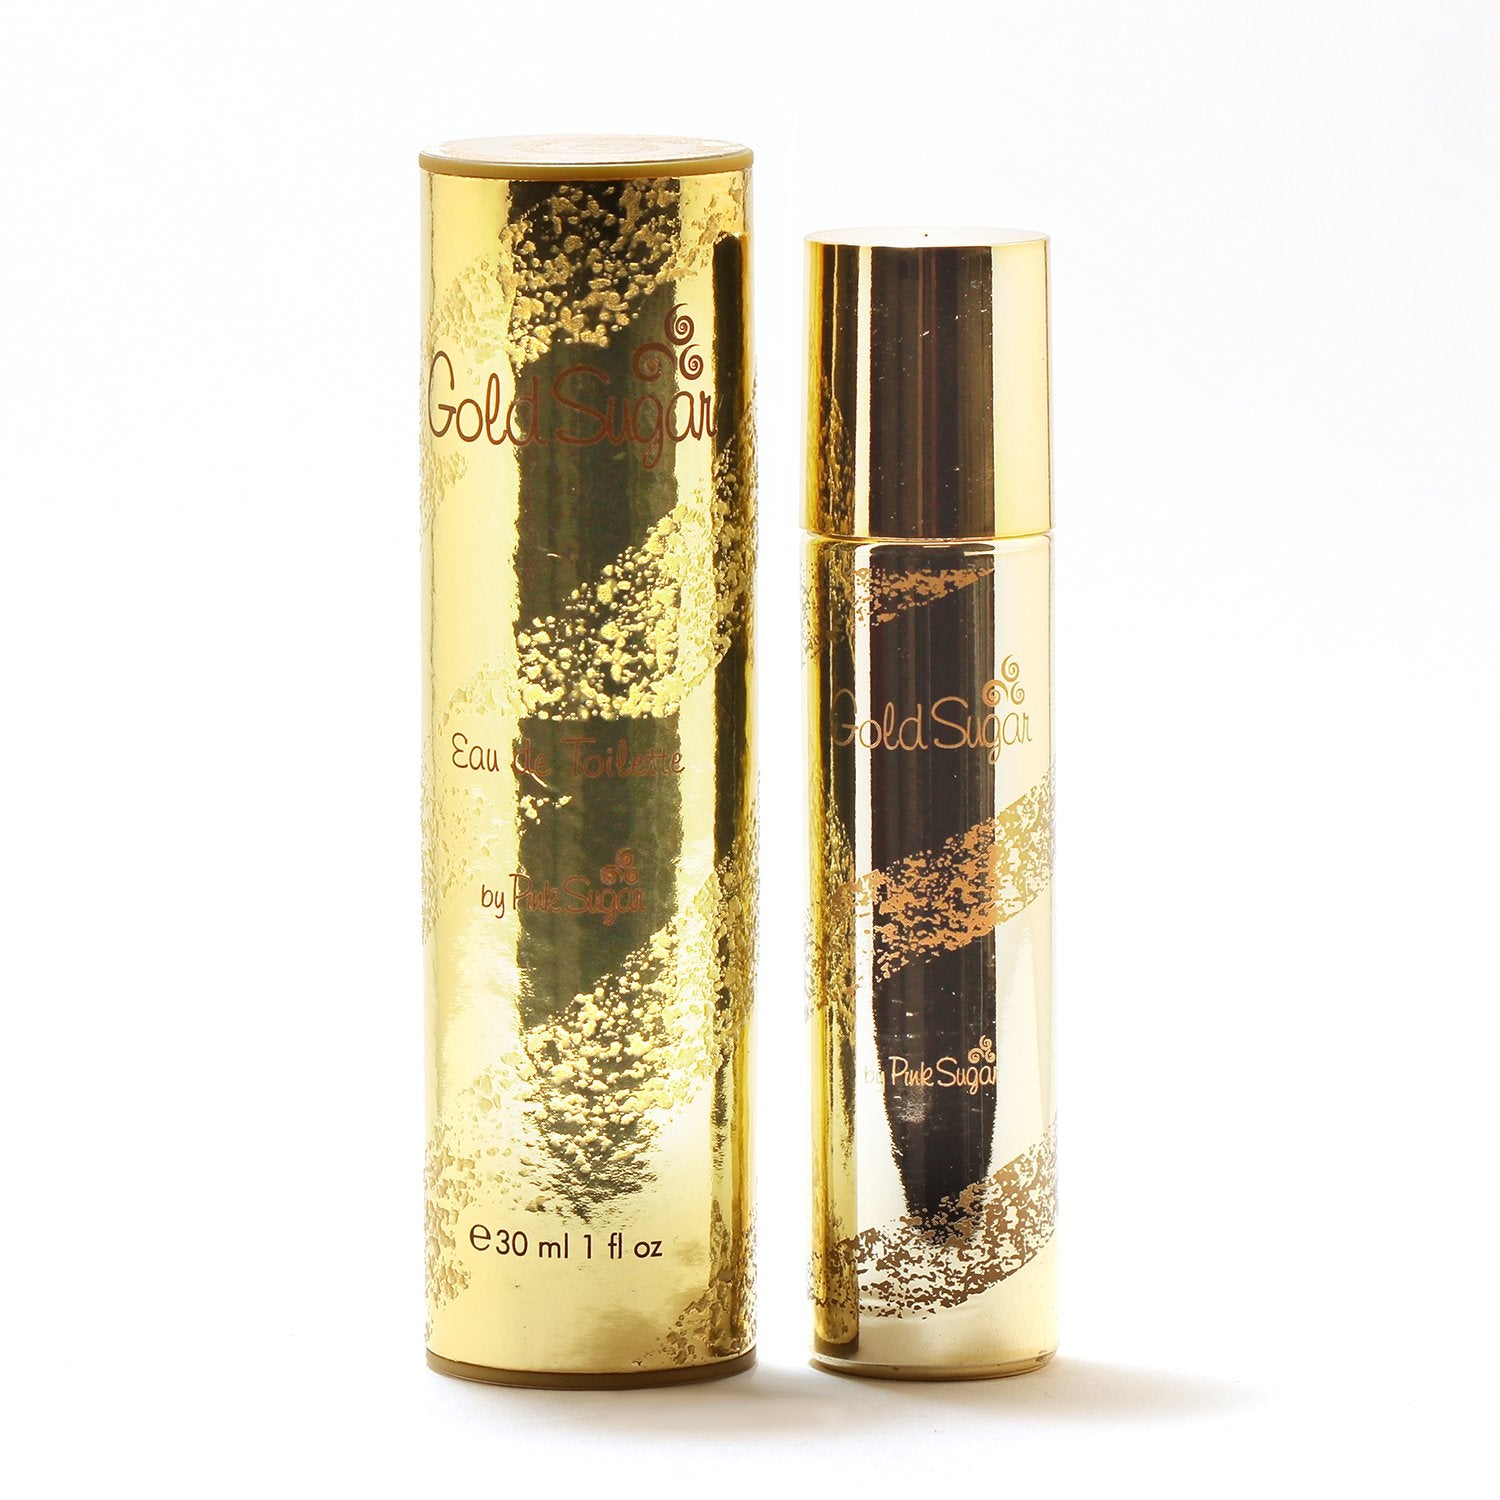 Perfume - GOLD SUGAR FOR WOMEN BY AQUOLINA - EAU DE TOILETTE SPRAY